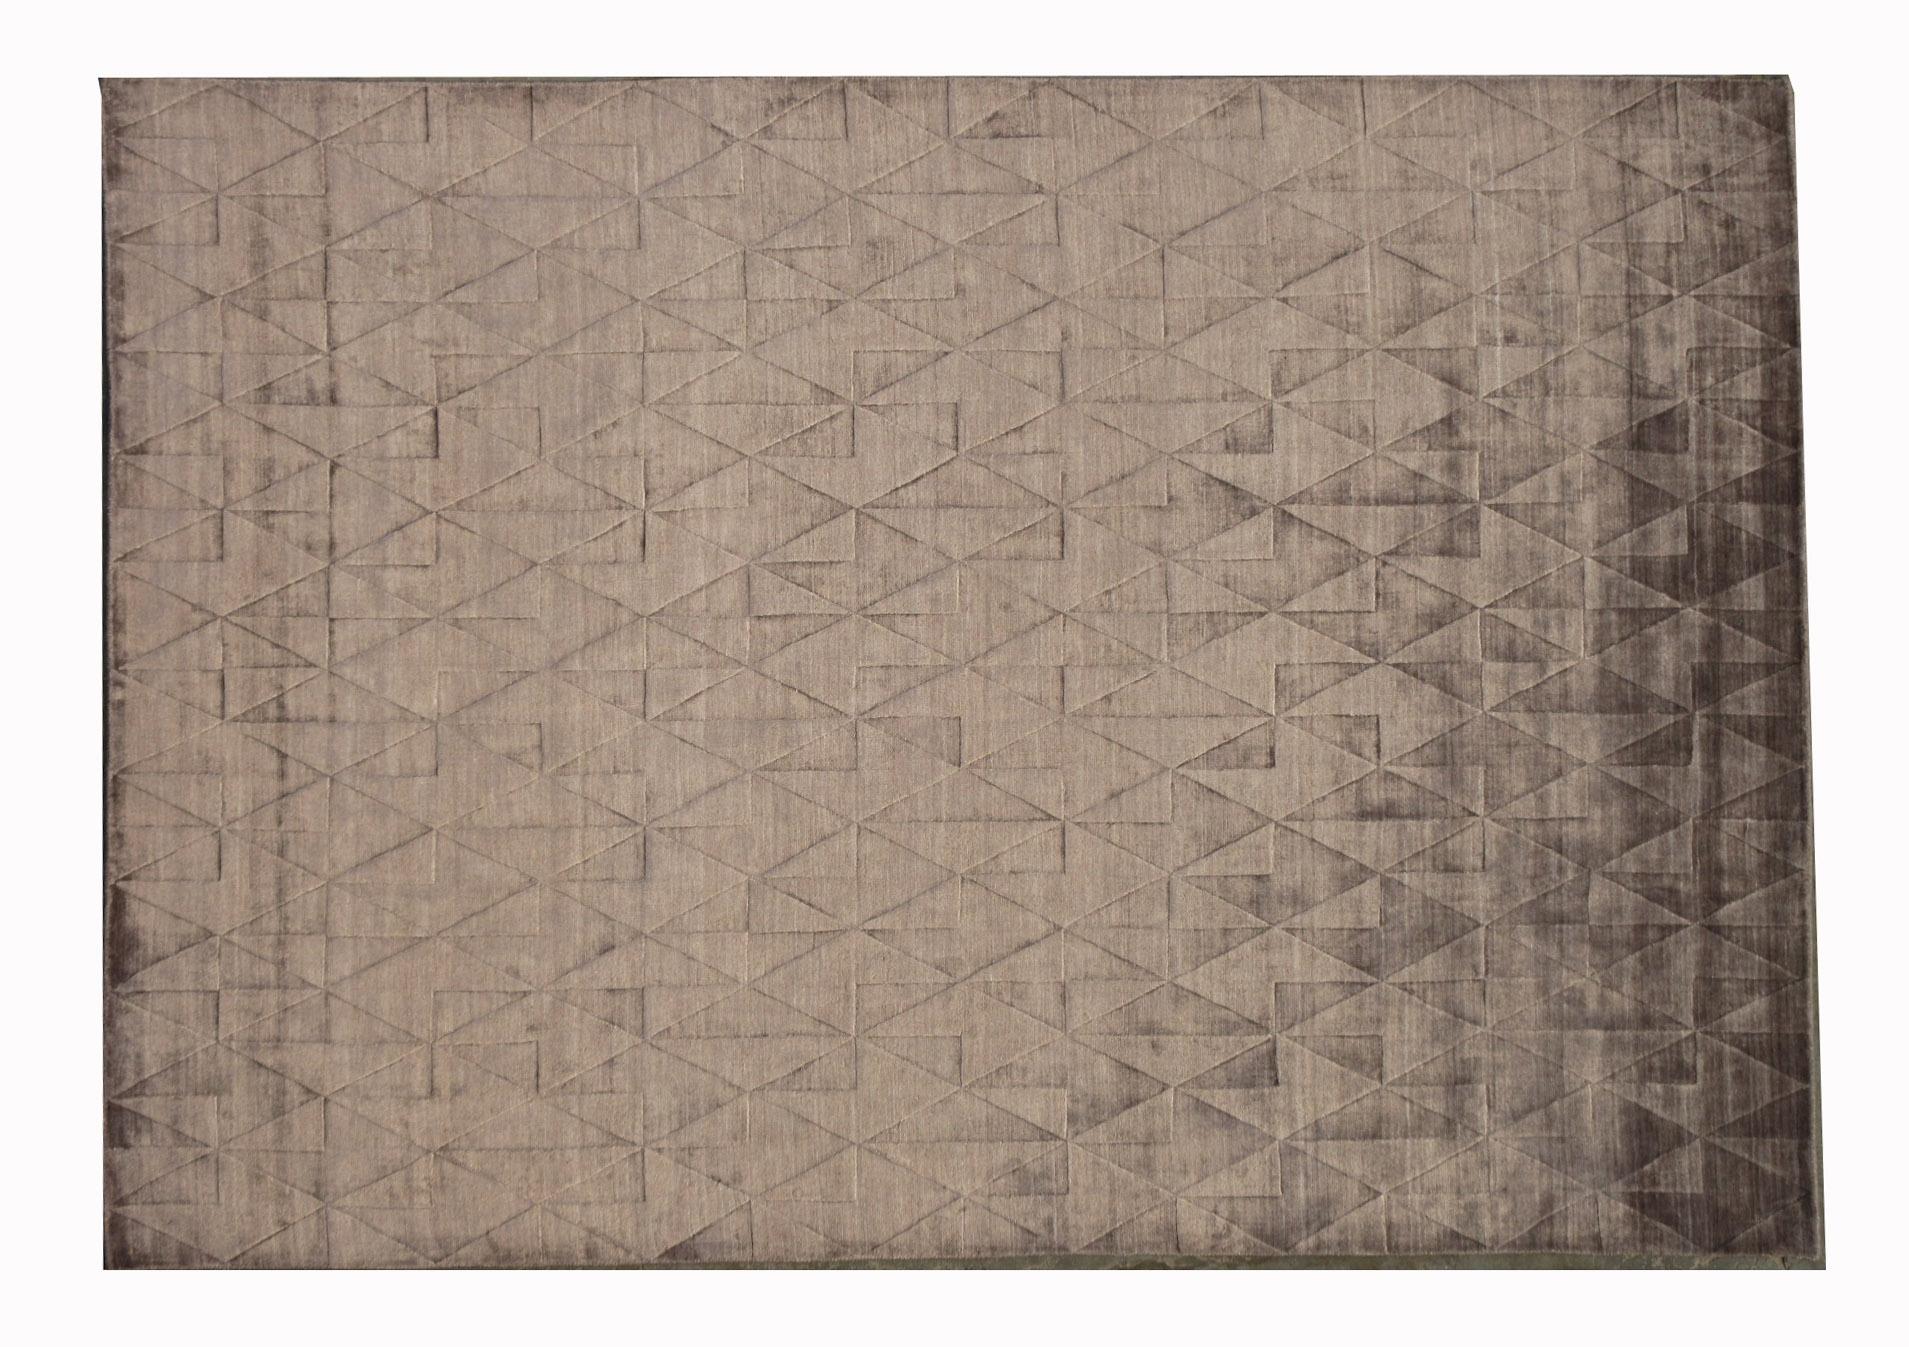 Handmade silk pile on a cotton foundation.

Dimensions: 8' x 11'2